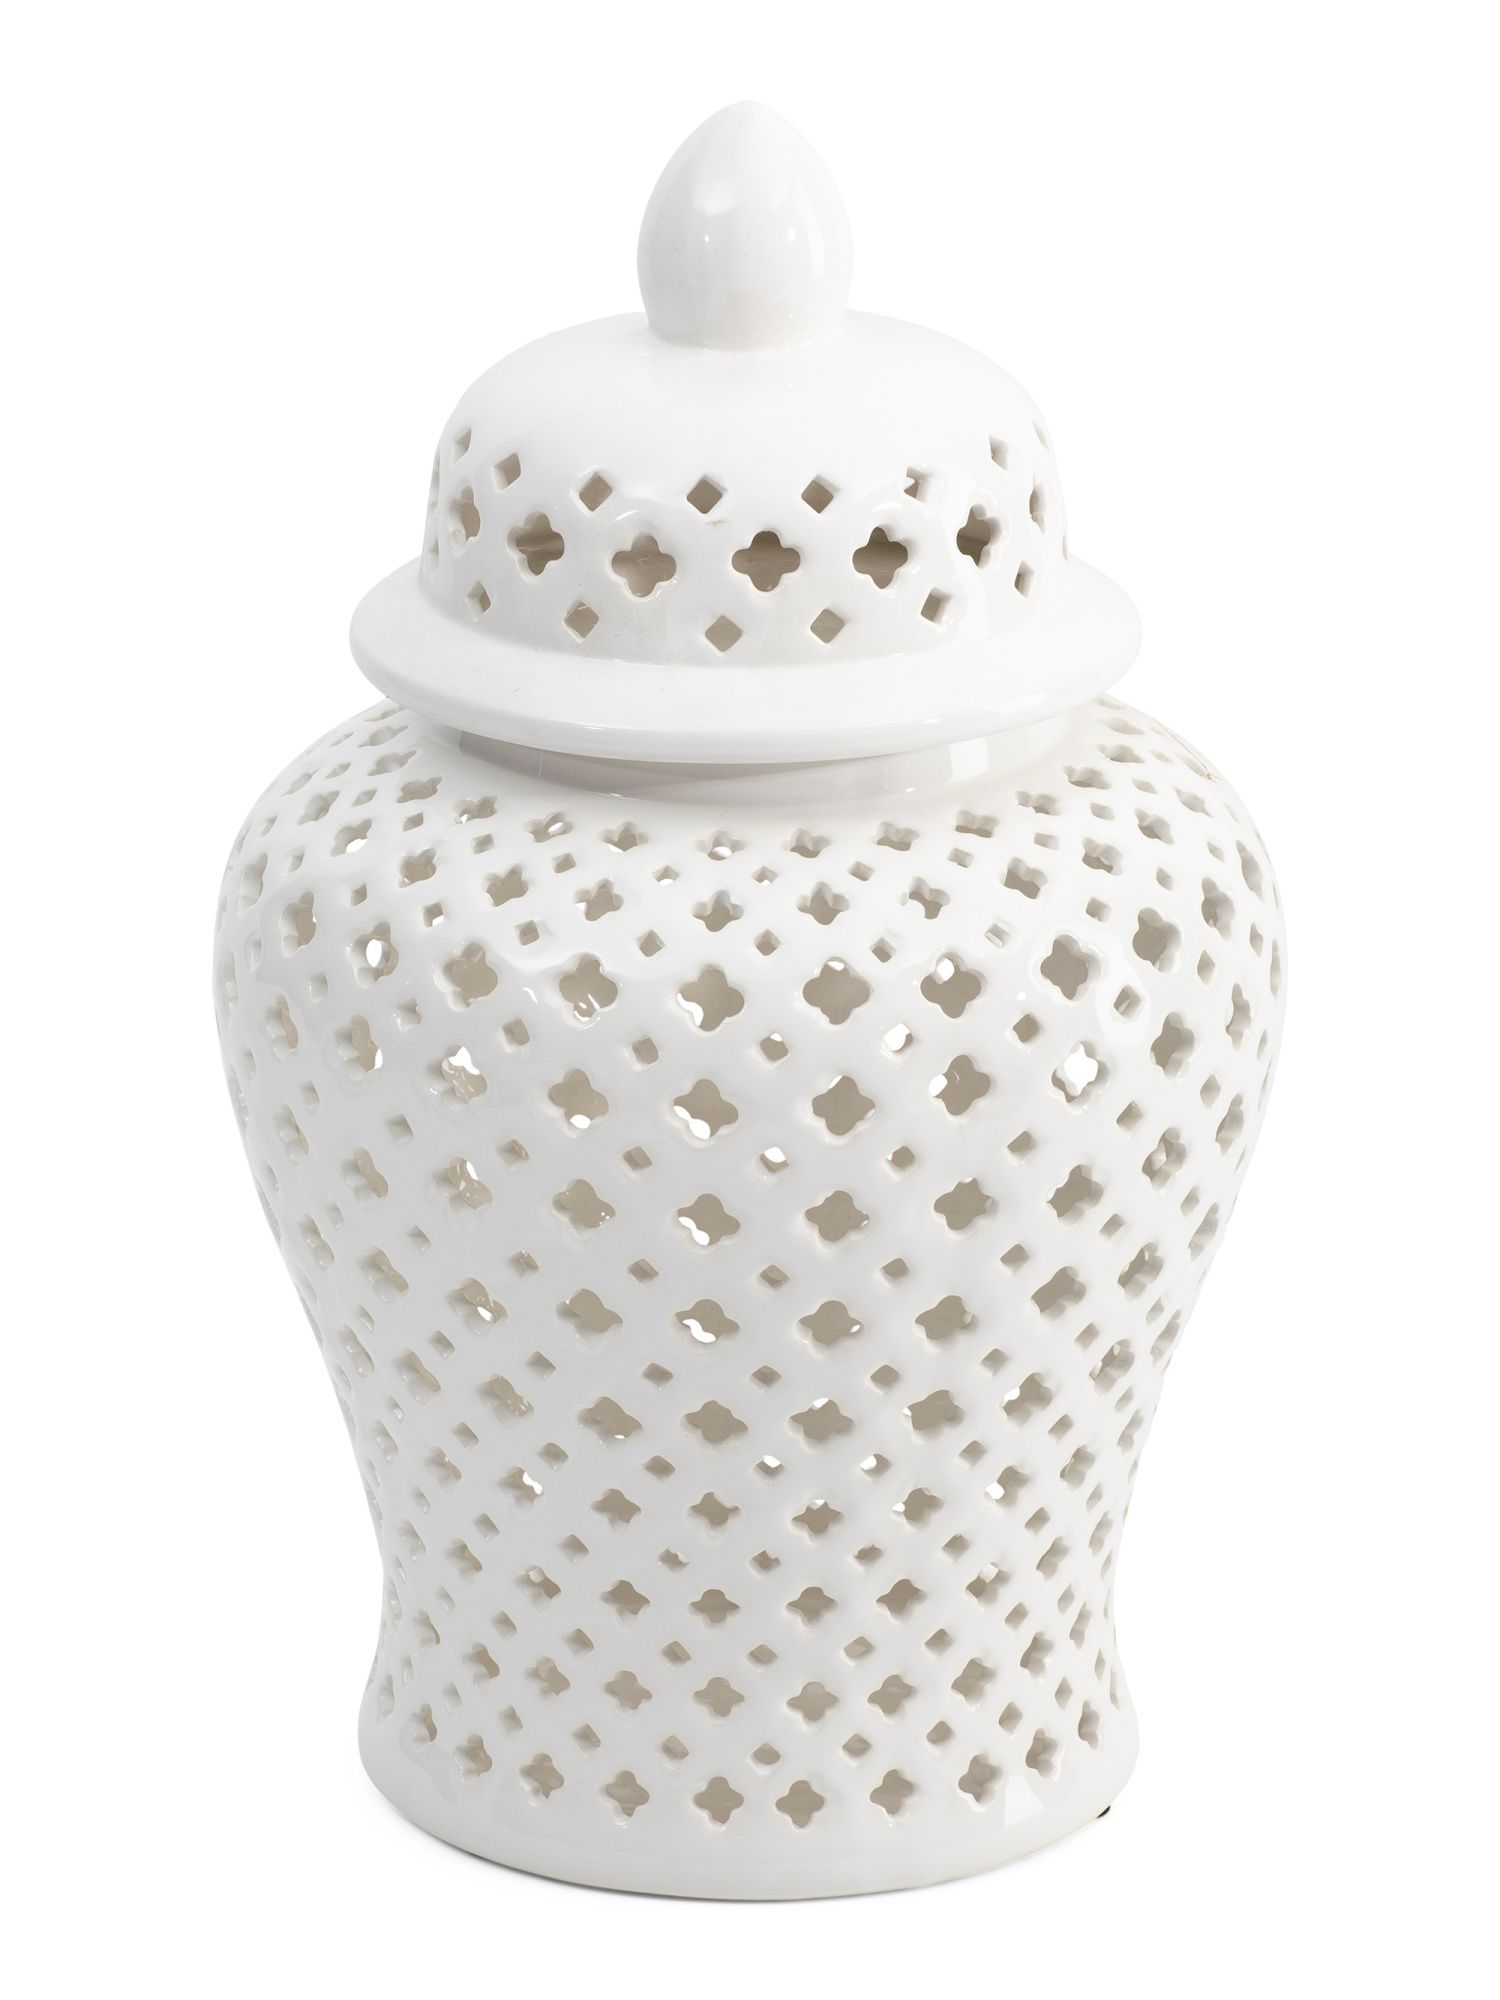 18in Pierced Ceramic Temple Jar With Lid | Pillows & Decor | Marshalls | Marshalls